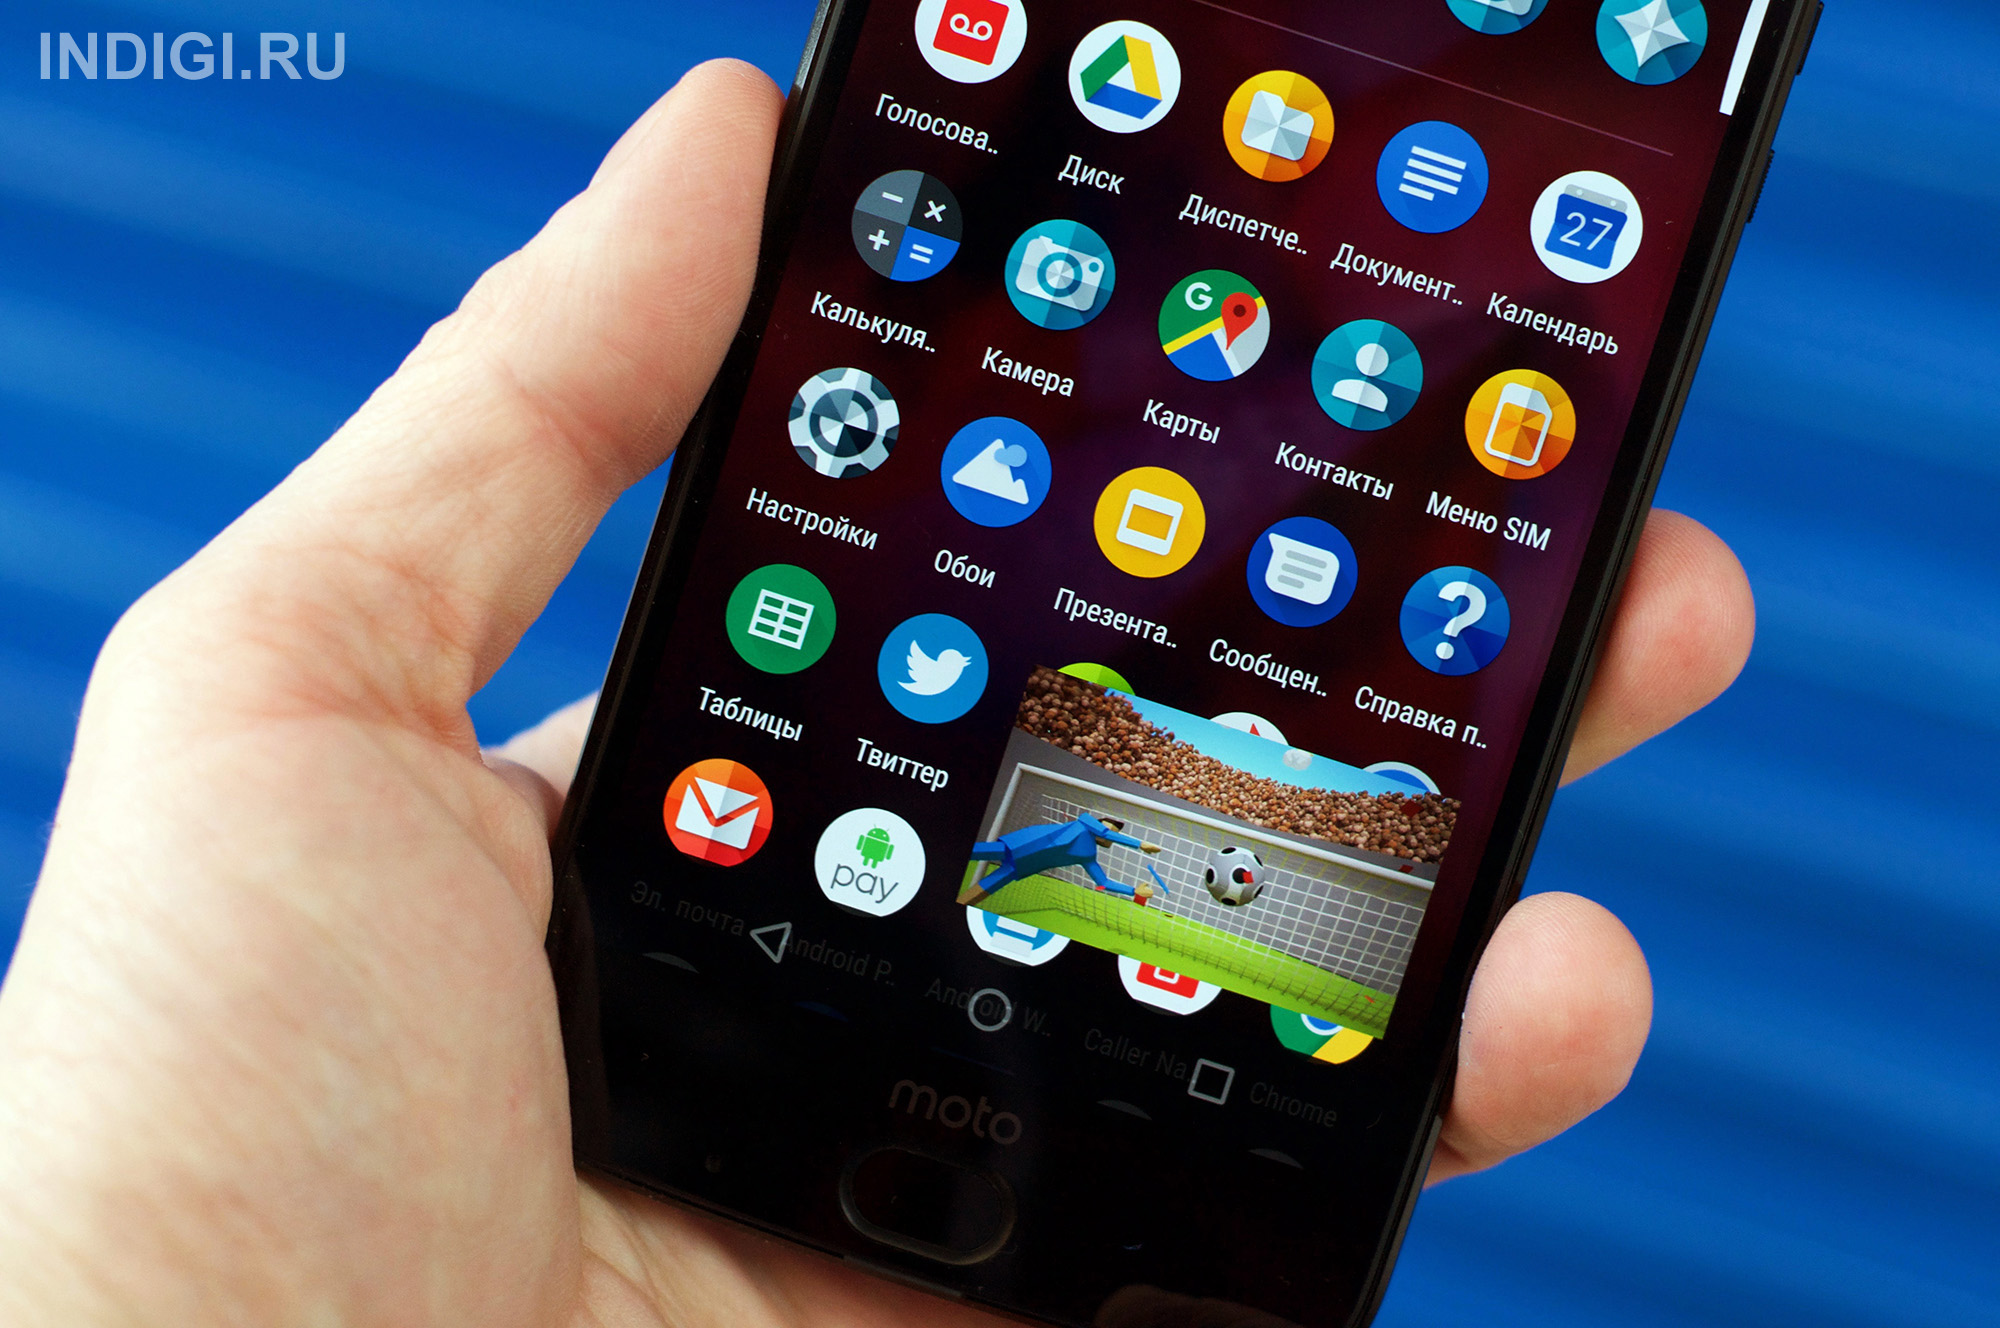 Новый android 8. Android 8. Андроид 8 Орео. Android Oreo 8.0.0. Android Oreo 8.1.0.